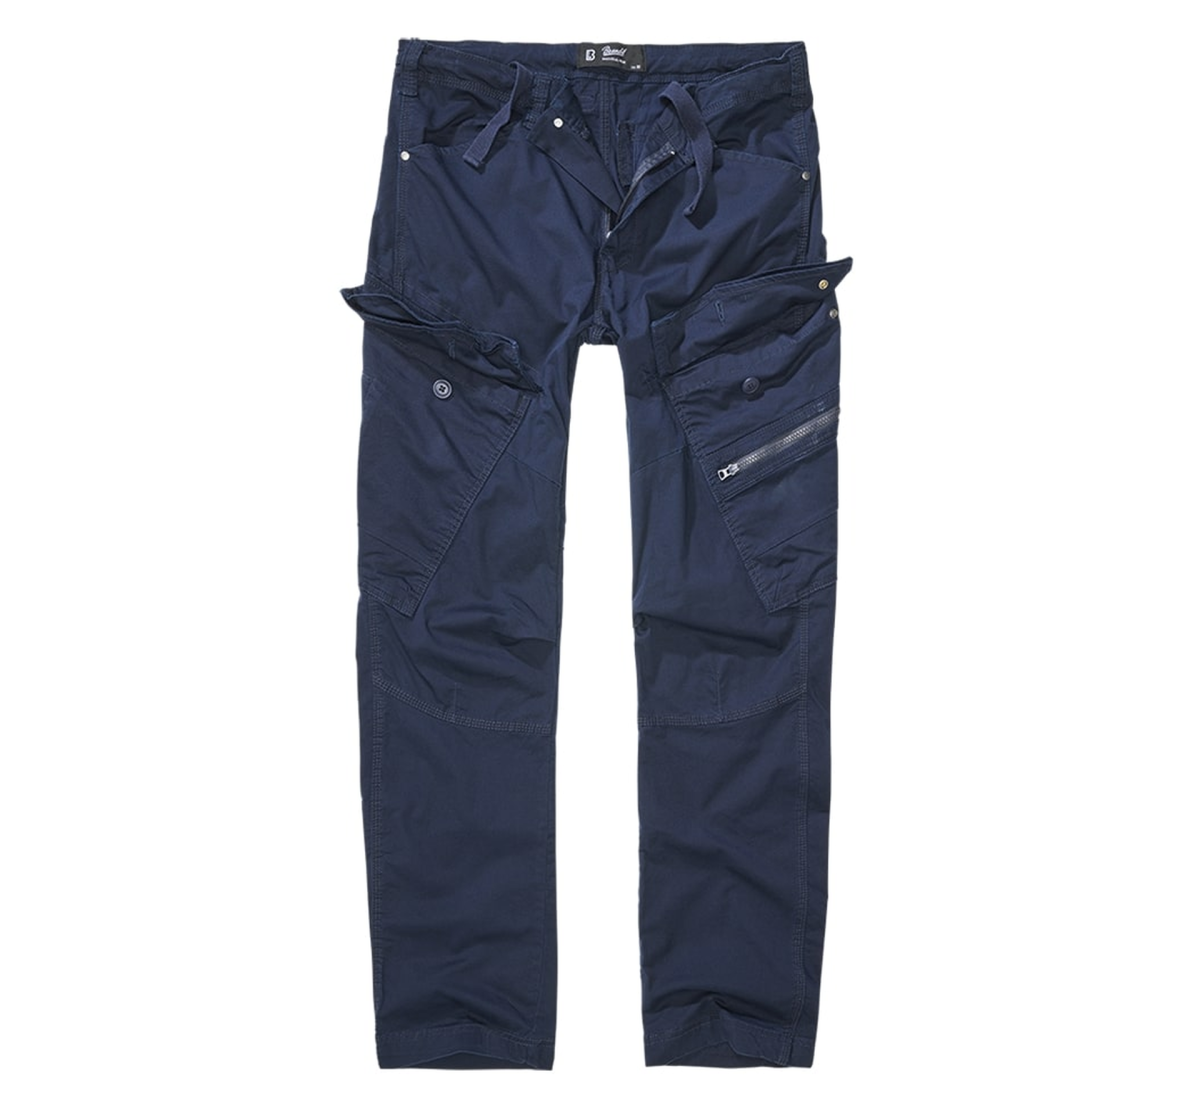 Brandit Adven Slim Fit Trousers  9470  navy  Herren Hose Cargohose